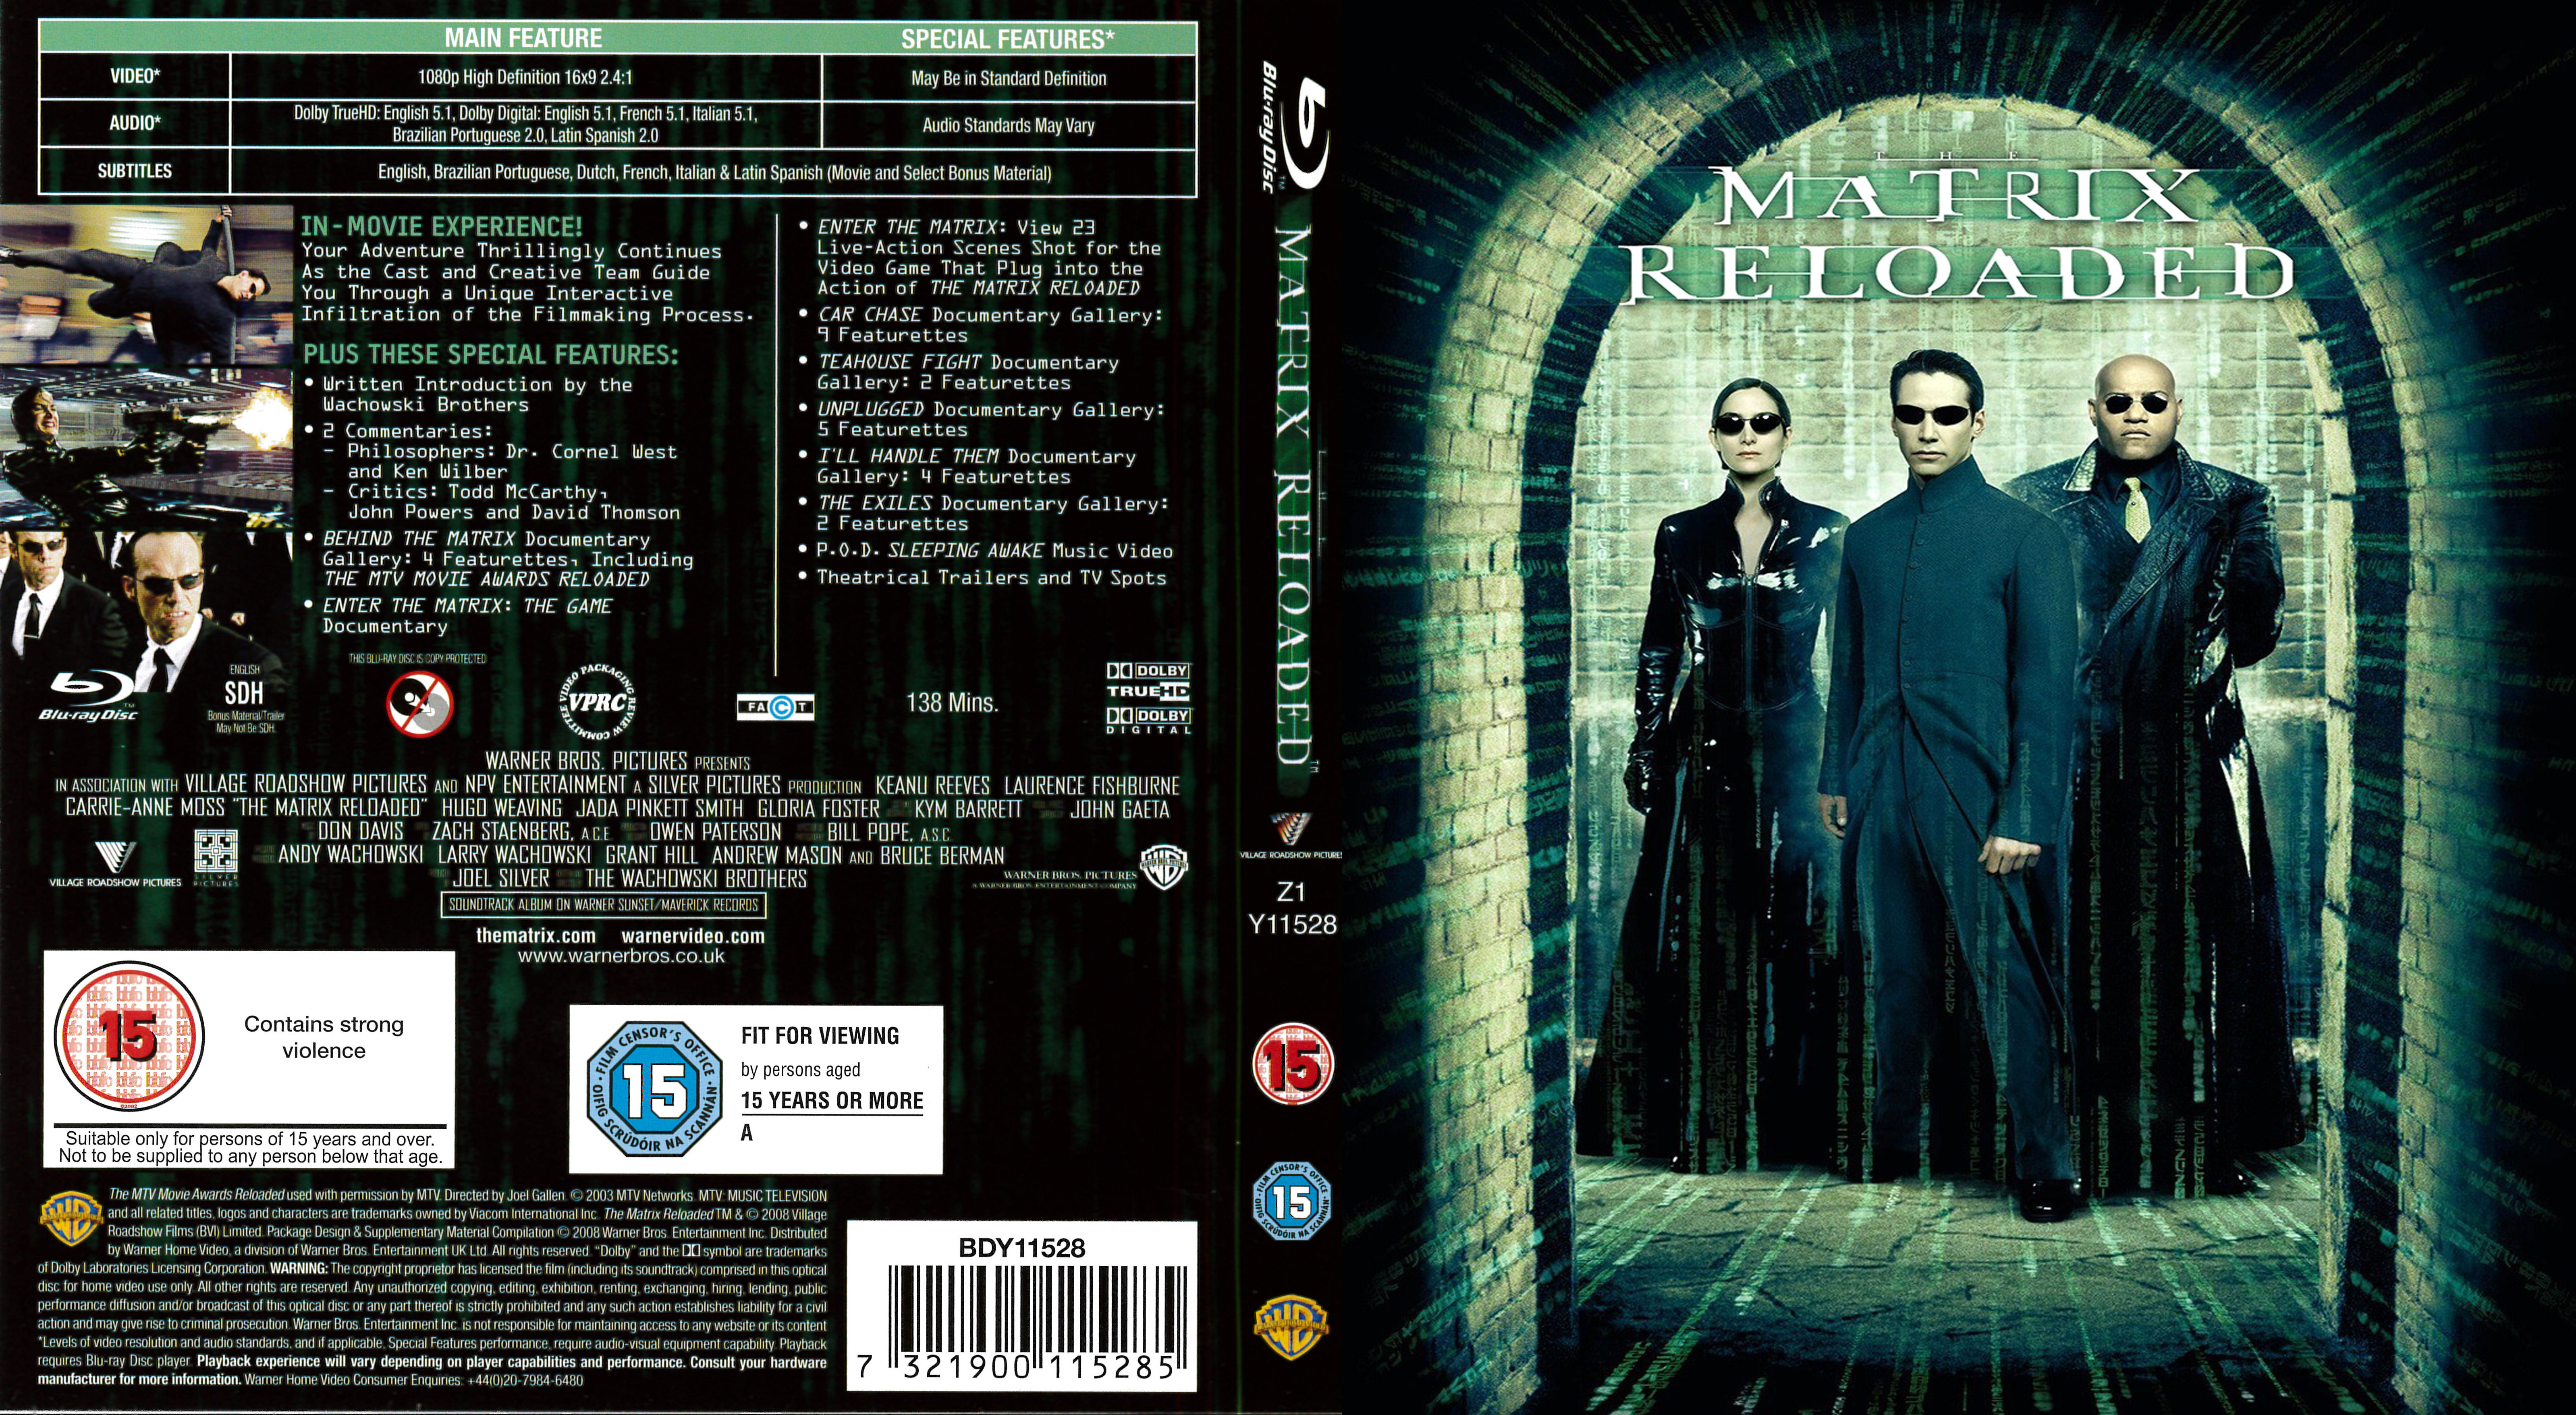 Jaquette DVD Matrix reloaded (BLU-RAY) v2